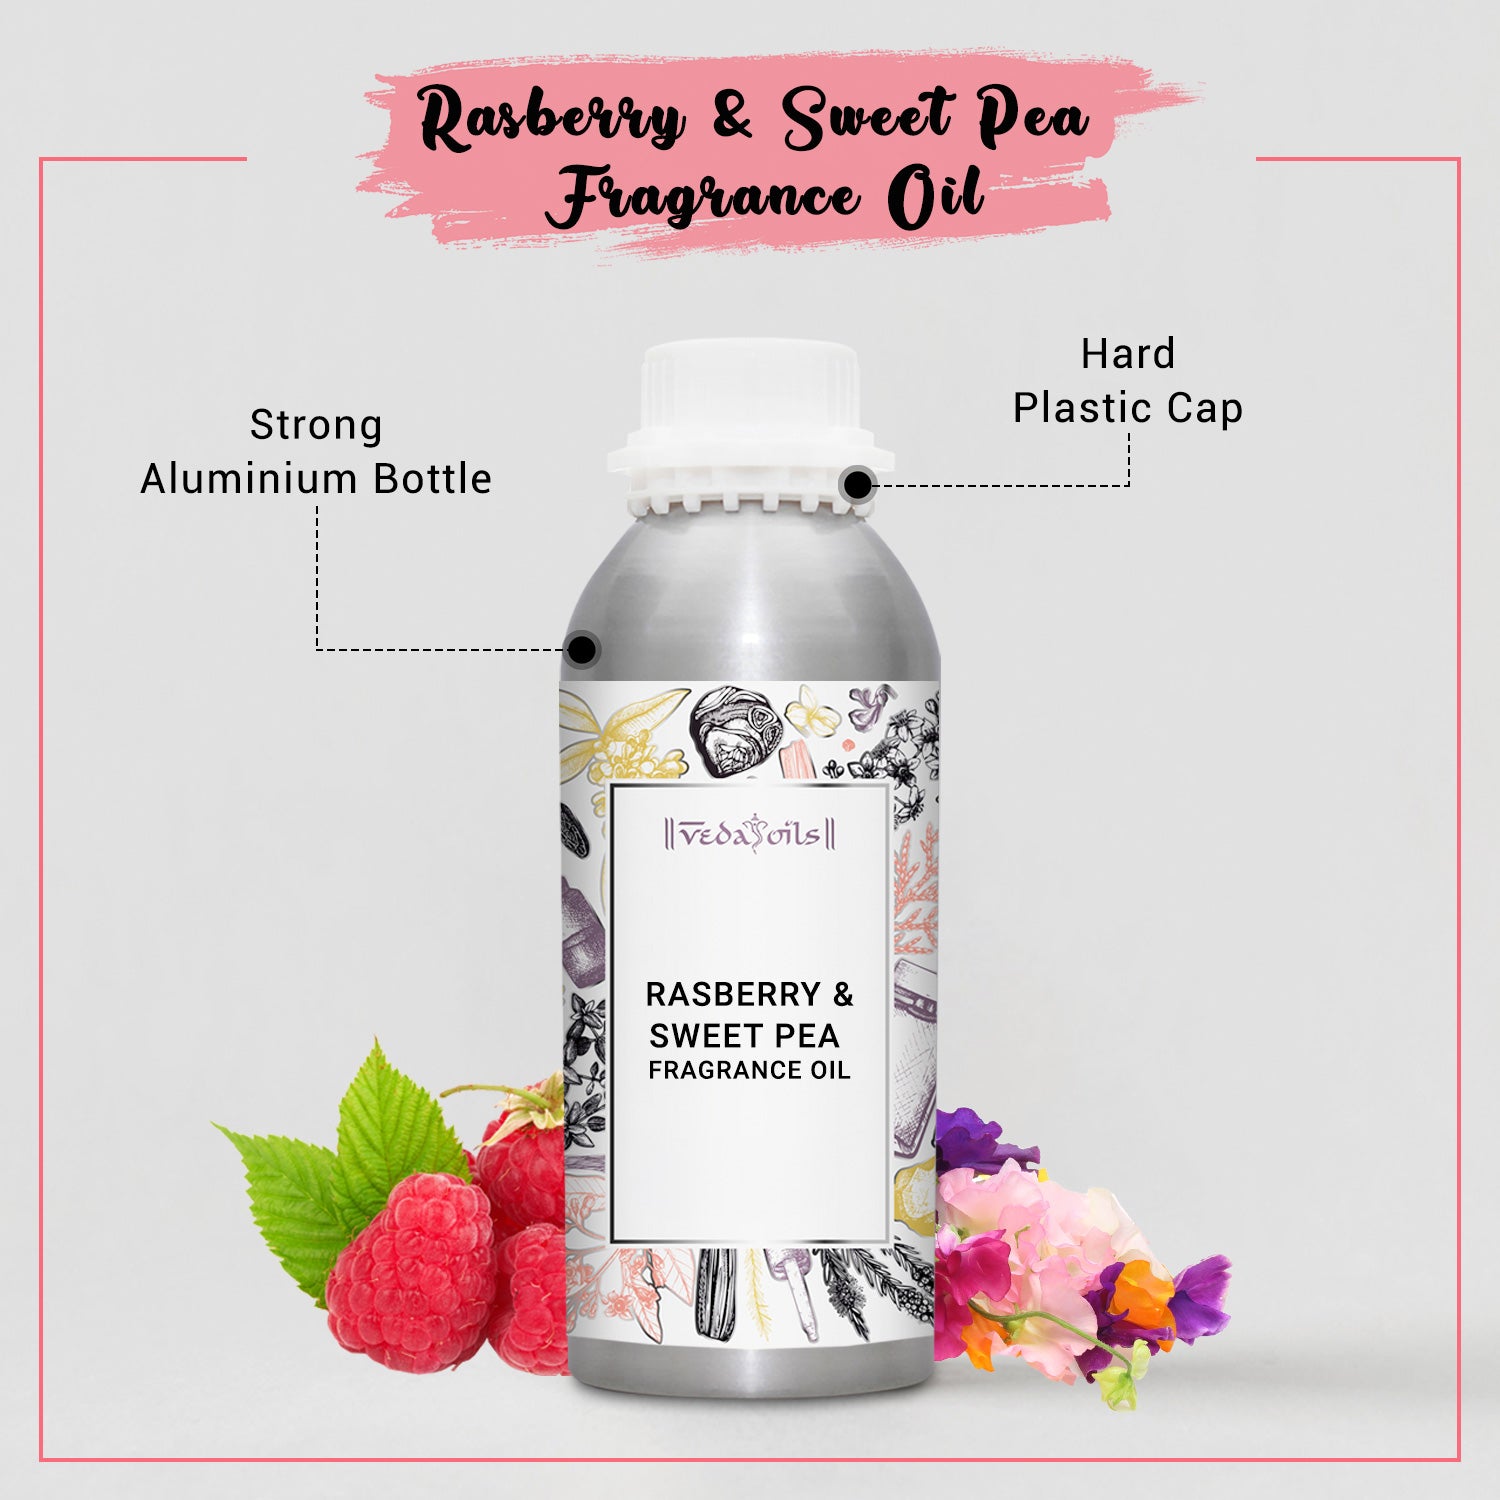 Rasberry & Sweet Pea Fragrance Oil